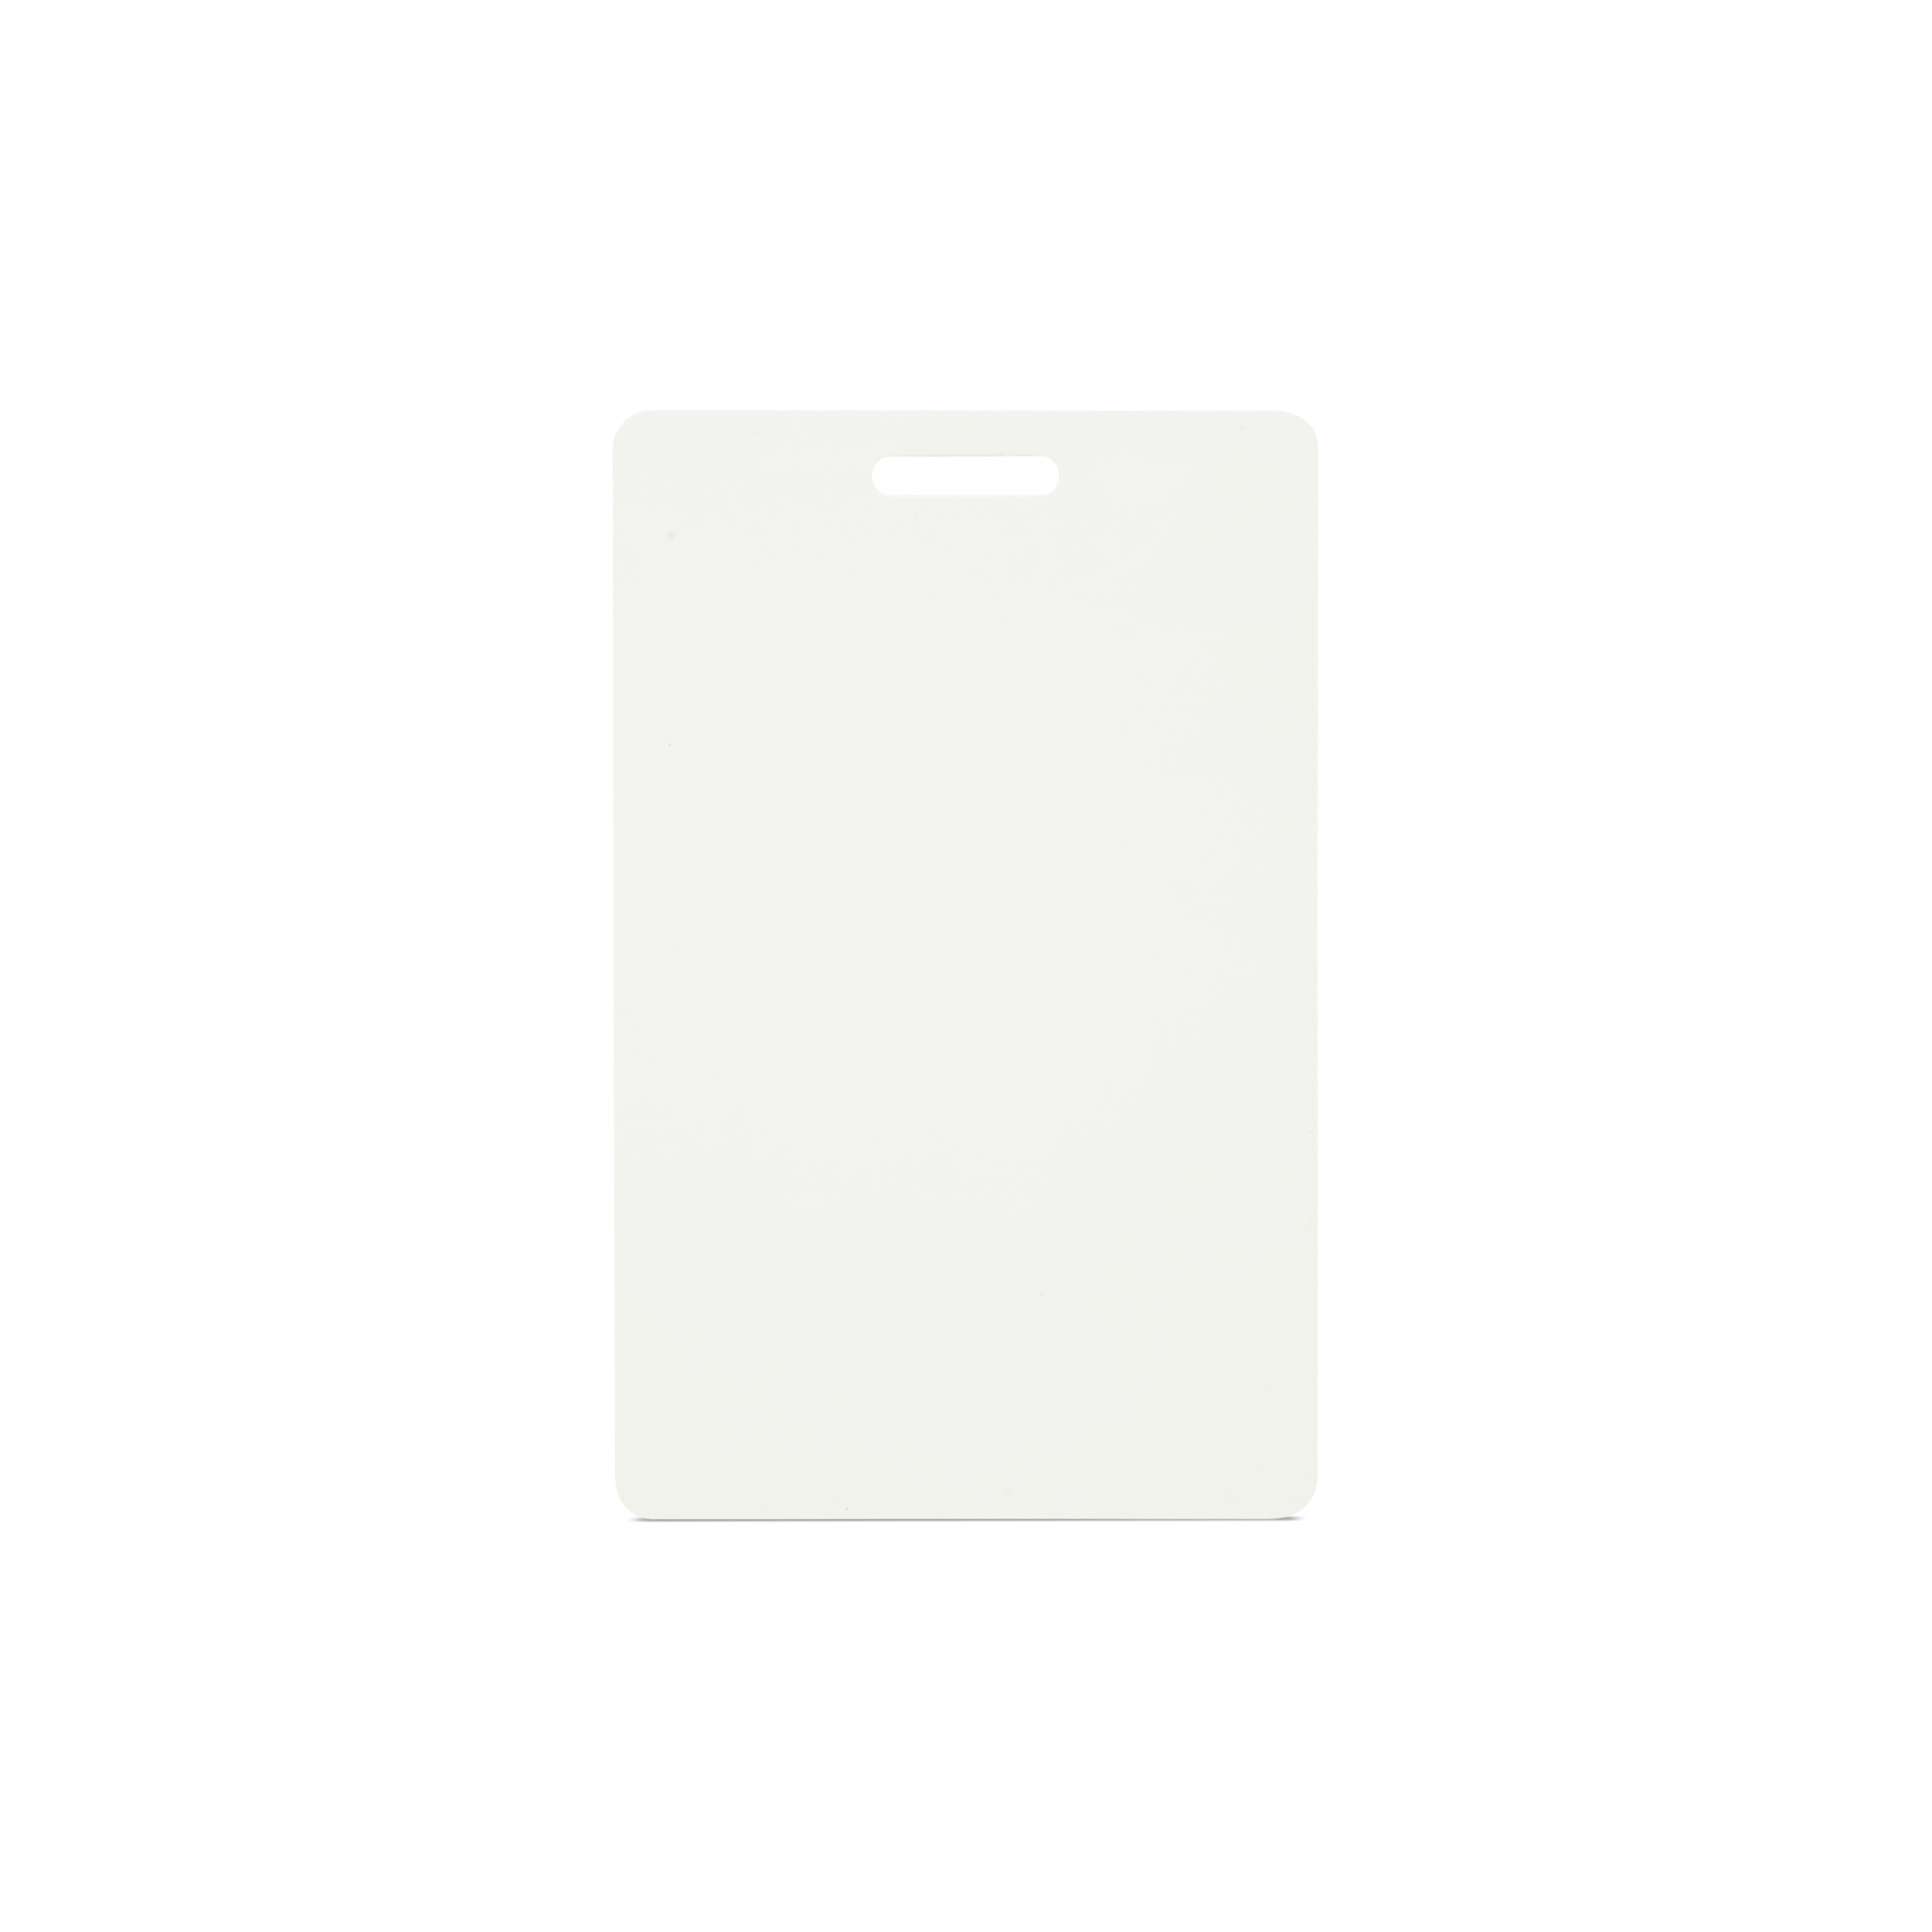 NFC Card PVC - 85,6 x 54 mm - NTAG216 - 924 Byte - white - portrait with slot